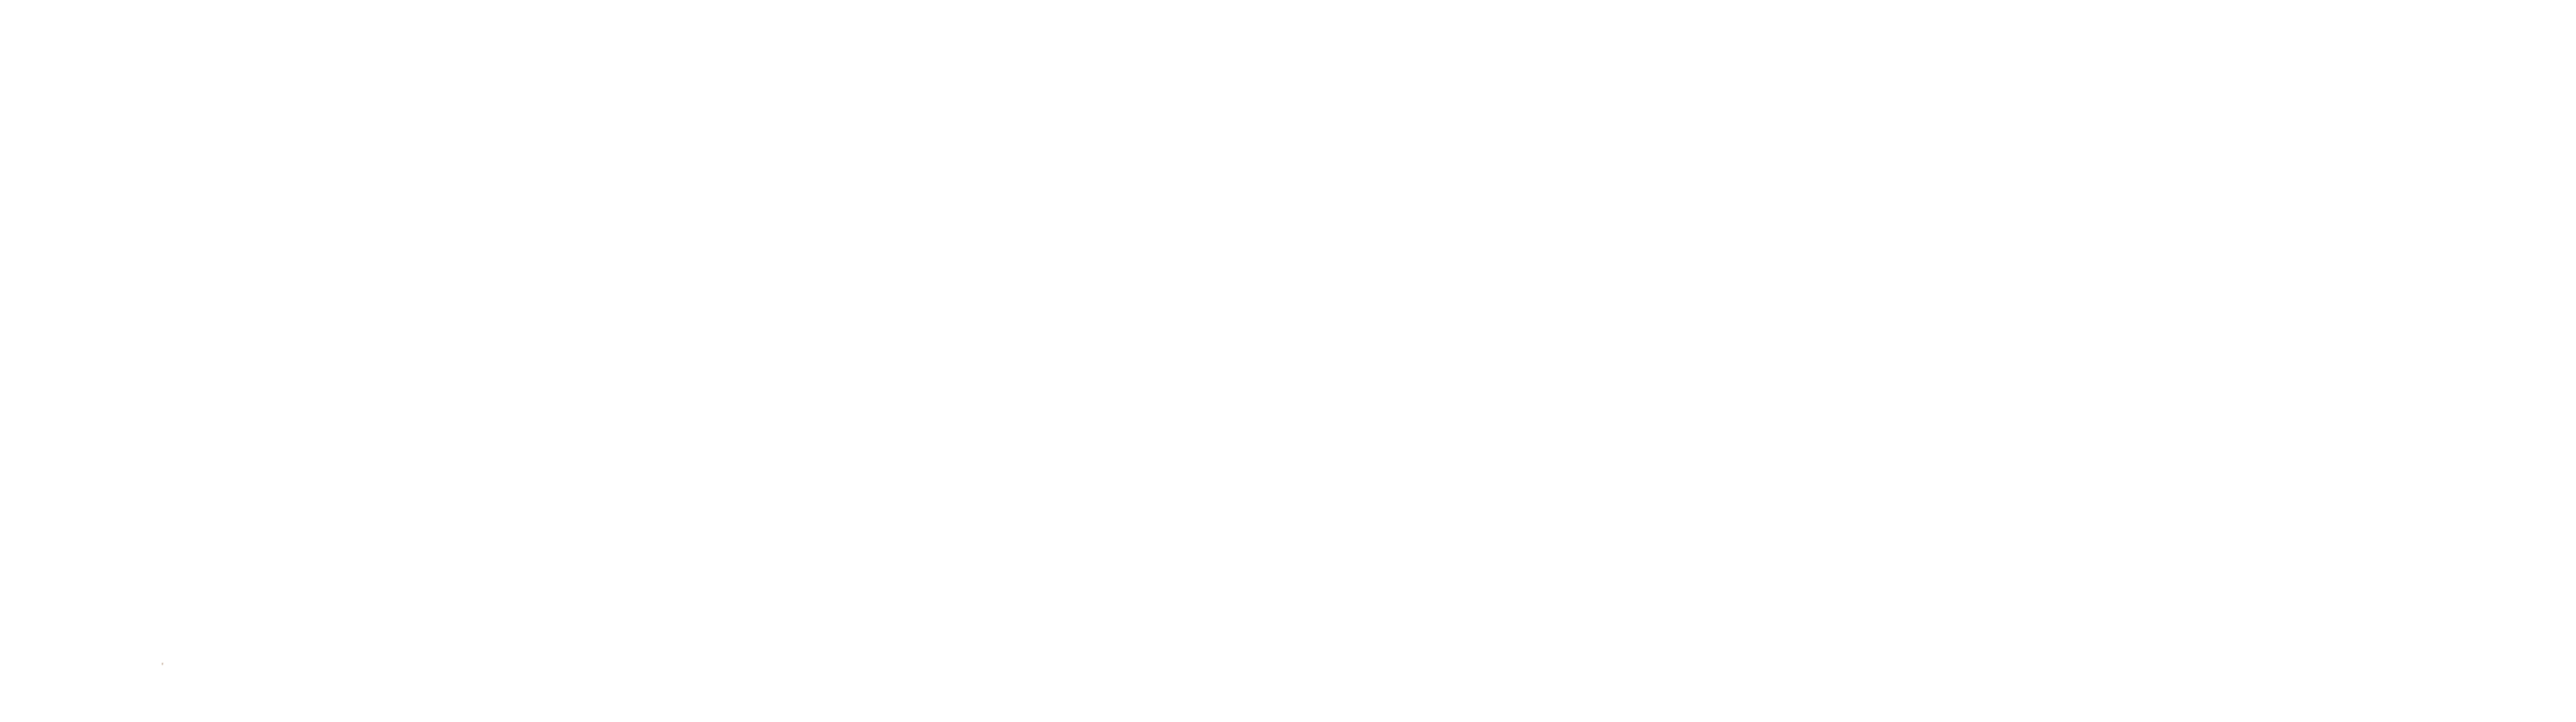 ACR Editor logo